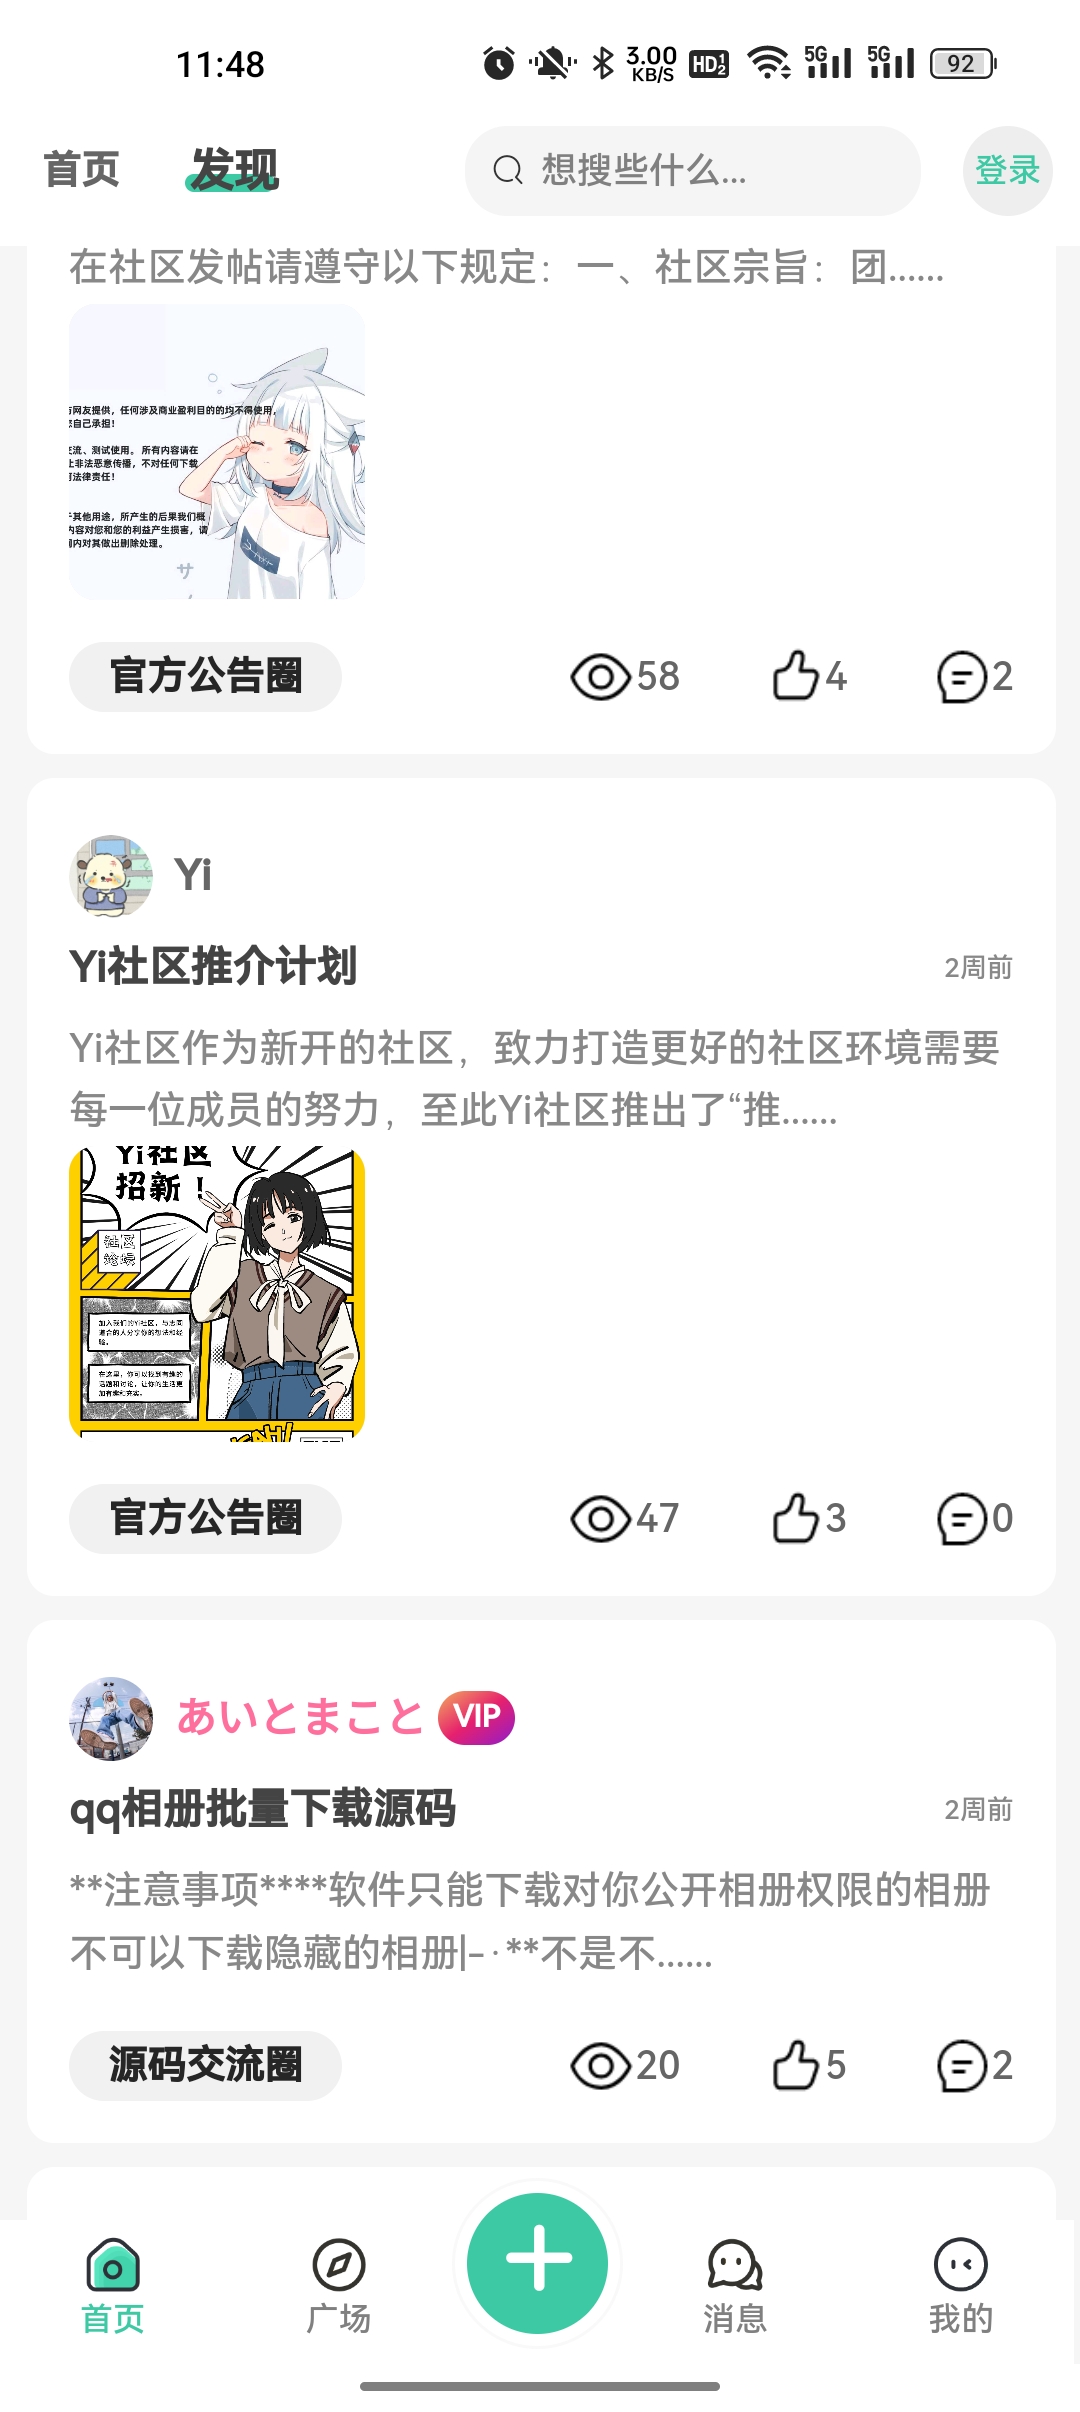 Yi社区app